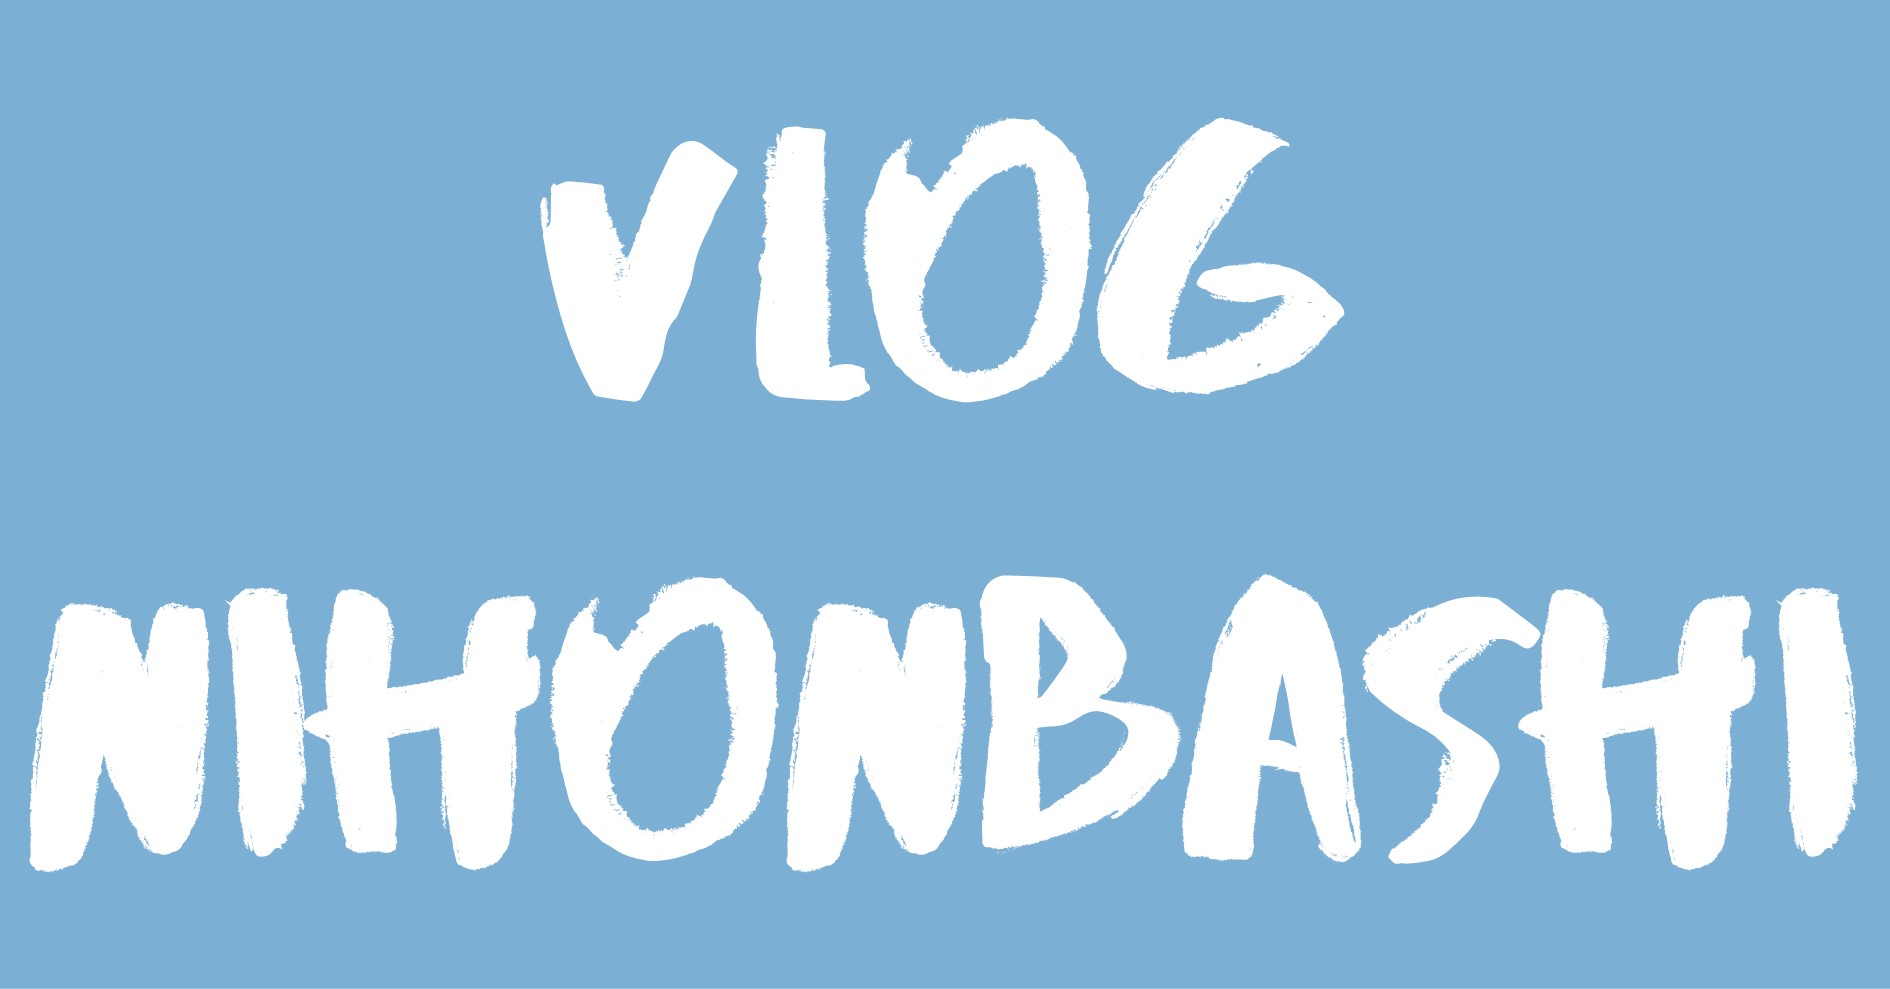 Vlog Nihonbashi